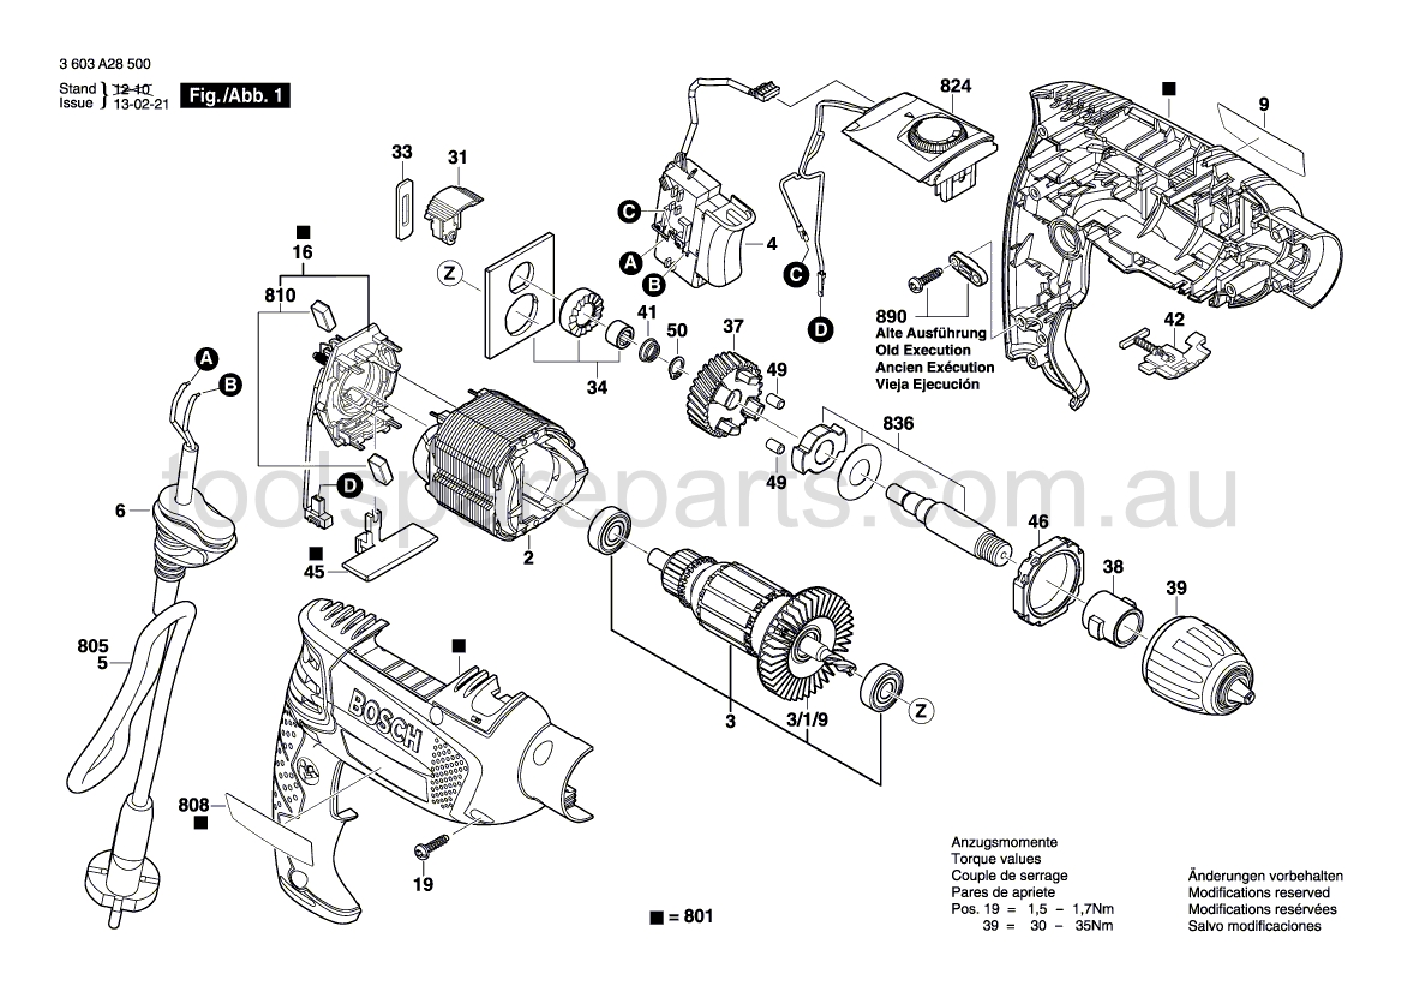 Bosch PSB 750 RCE 3603A28540  Diagram 1